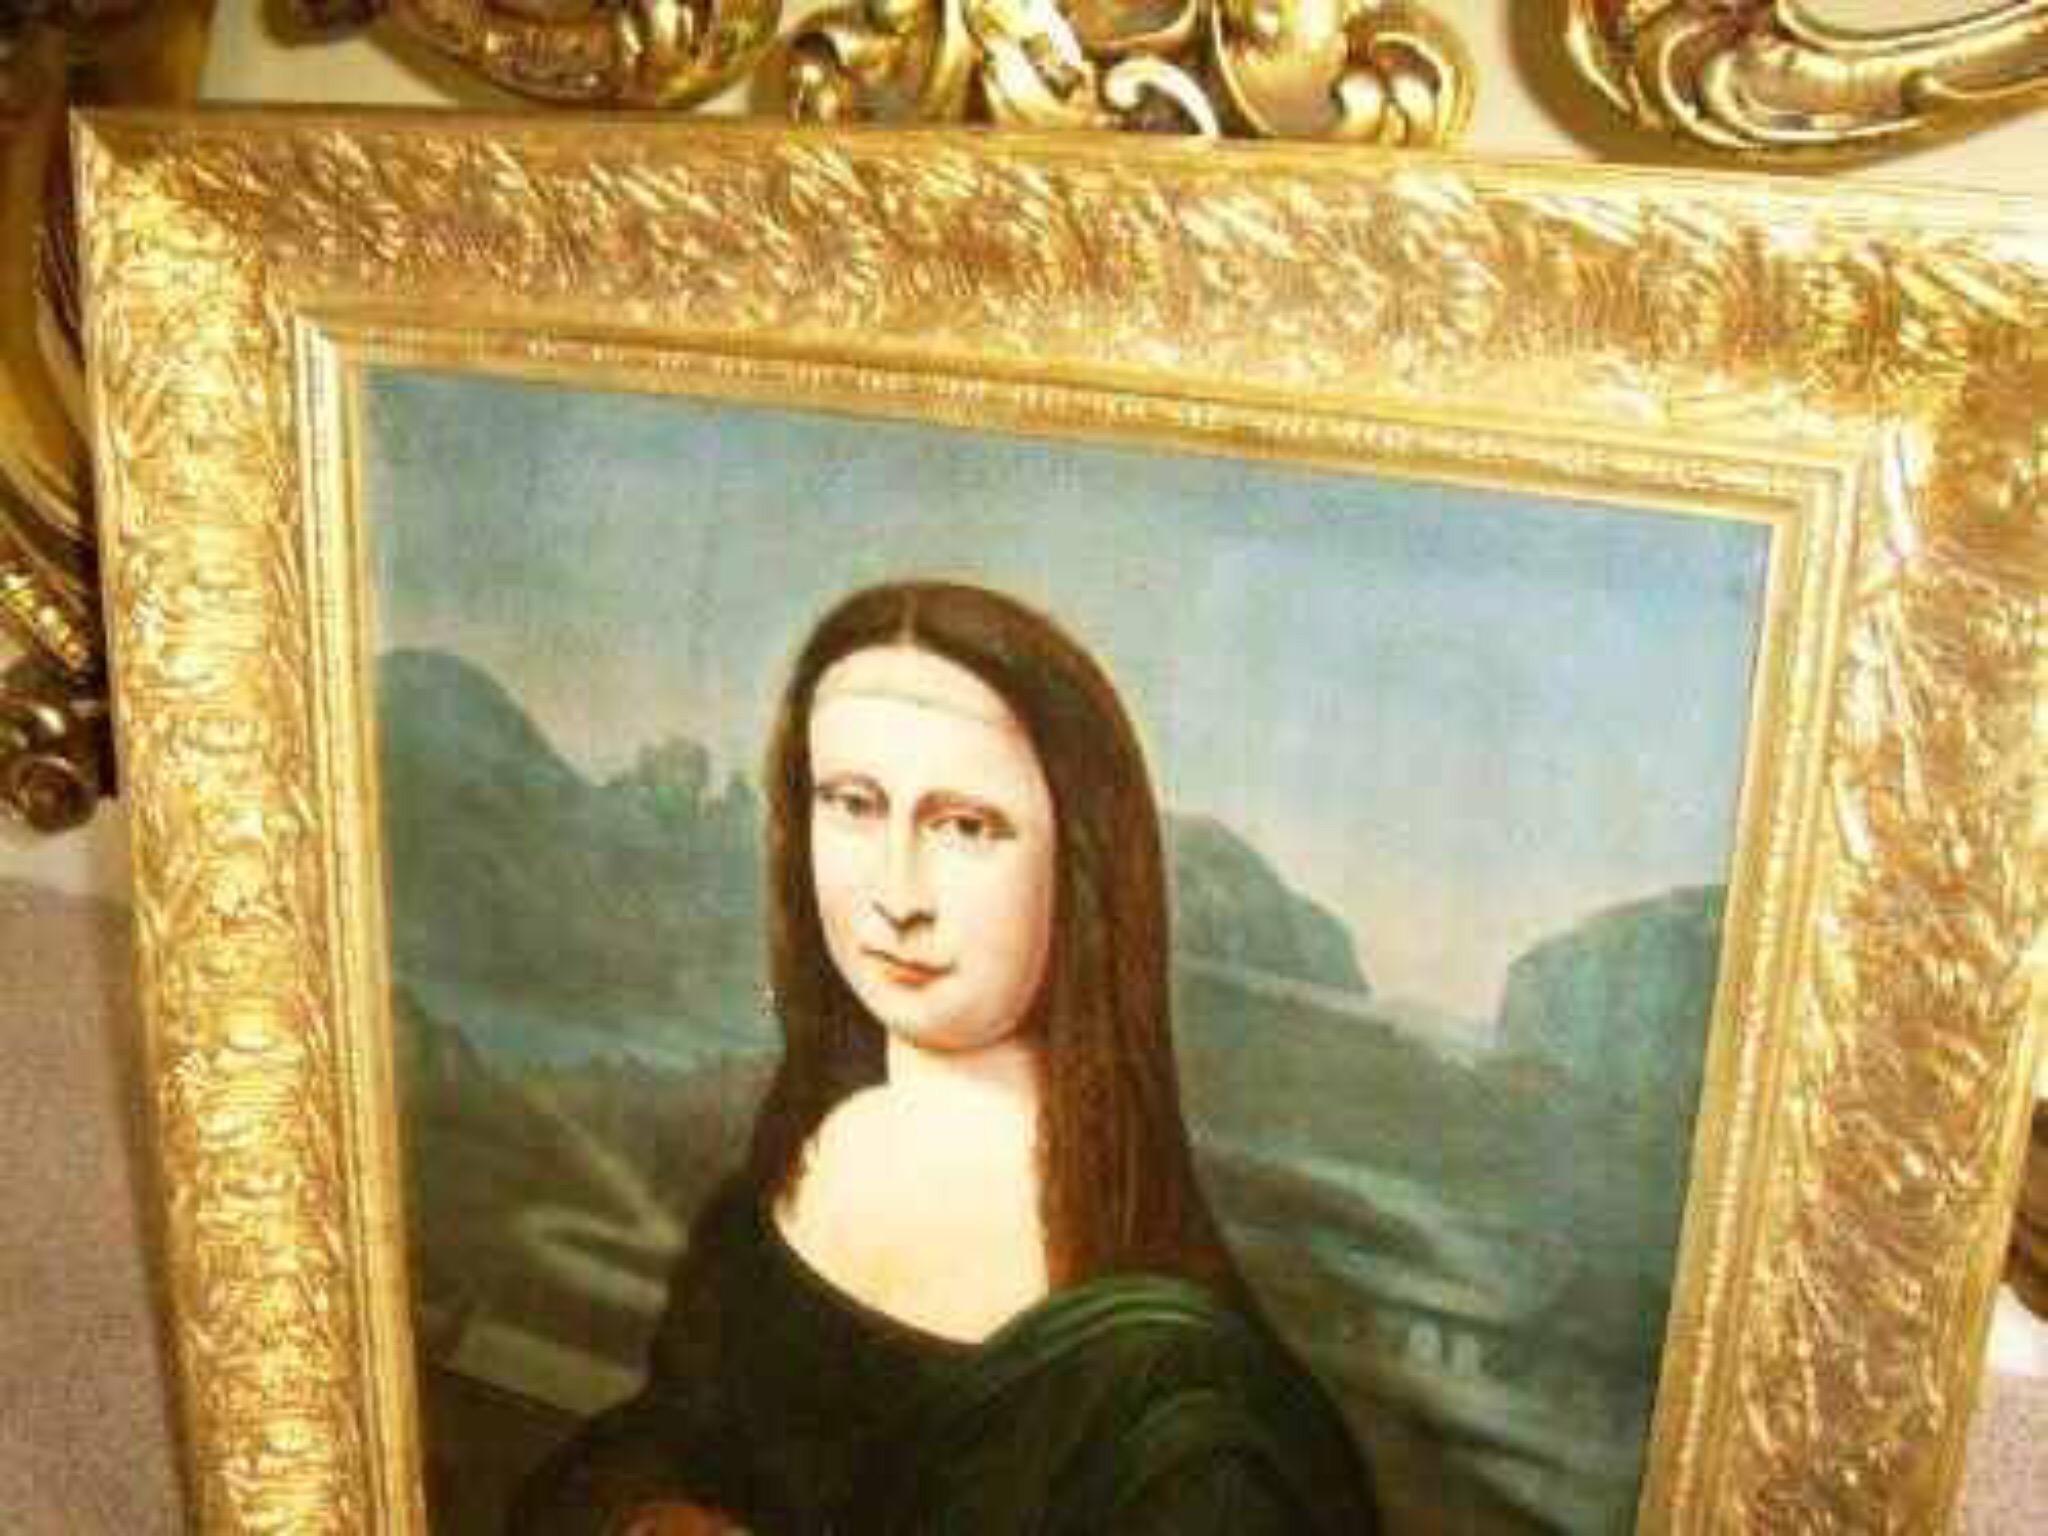 ABOUT THE ORIGINAL MONA LISA
The Mona Lisa (La Gioconda or La Joconde) is a half-length portrait of a woman by the Italian artist Leonardo da Vinci, which has been acclaimed as 